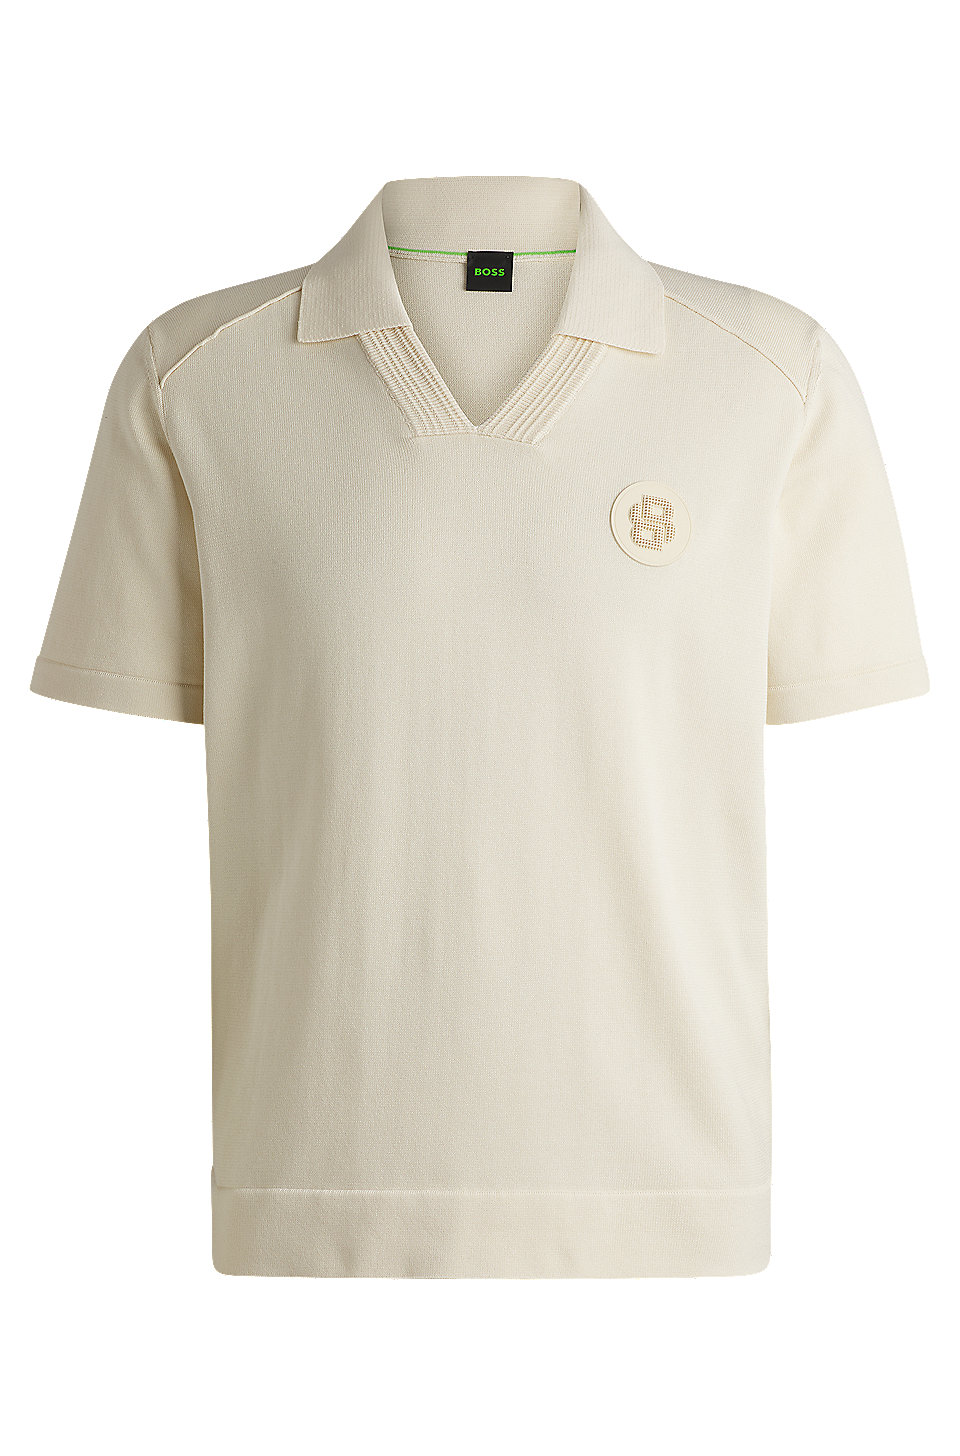 BOSS - Johnny-collar polo shirt with double-monogram badge